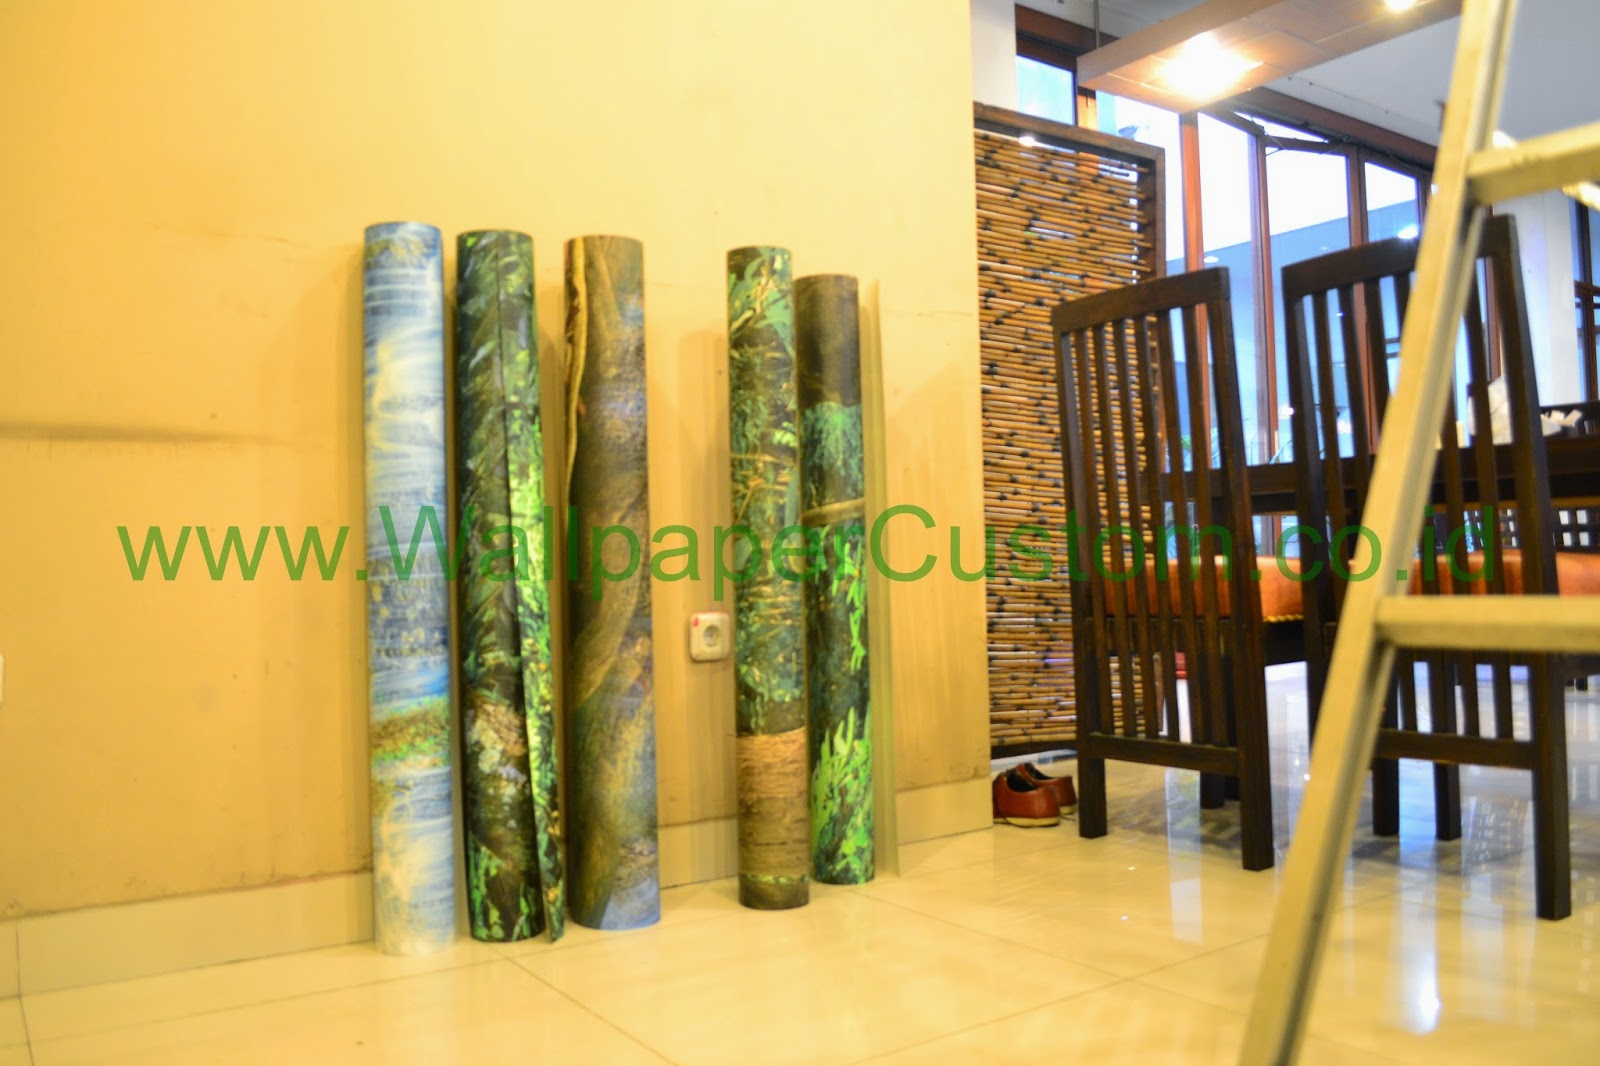 wallpaper dinding pemandangan,green,product,property,room,floor